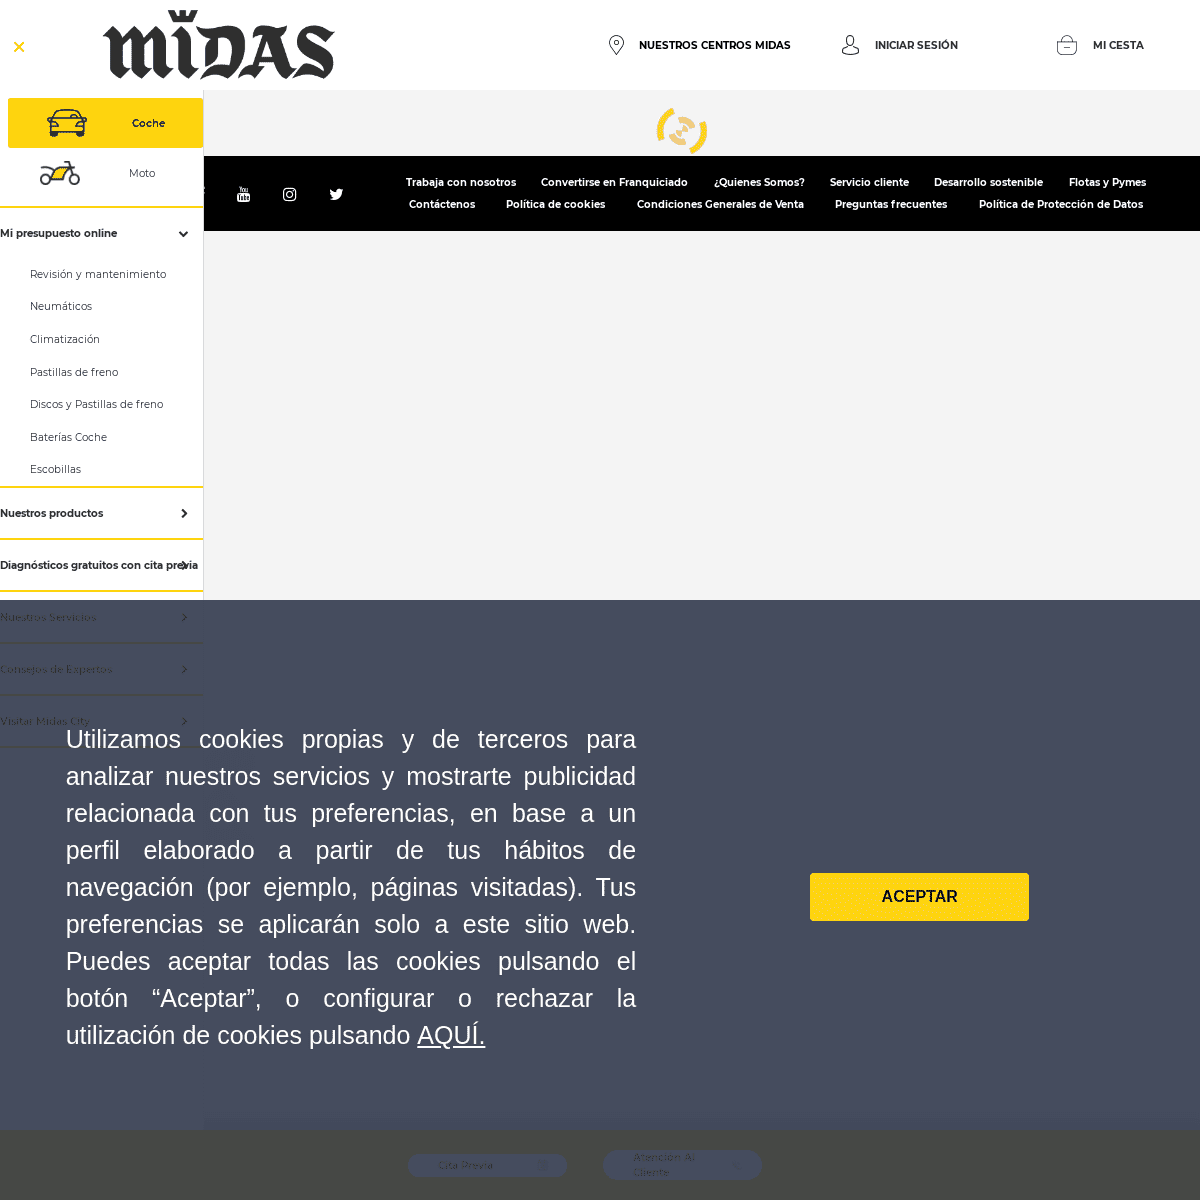 A complete backup of https://midas.es